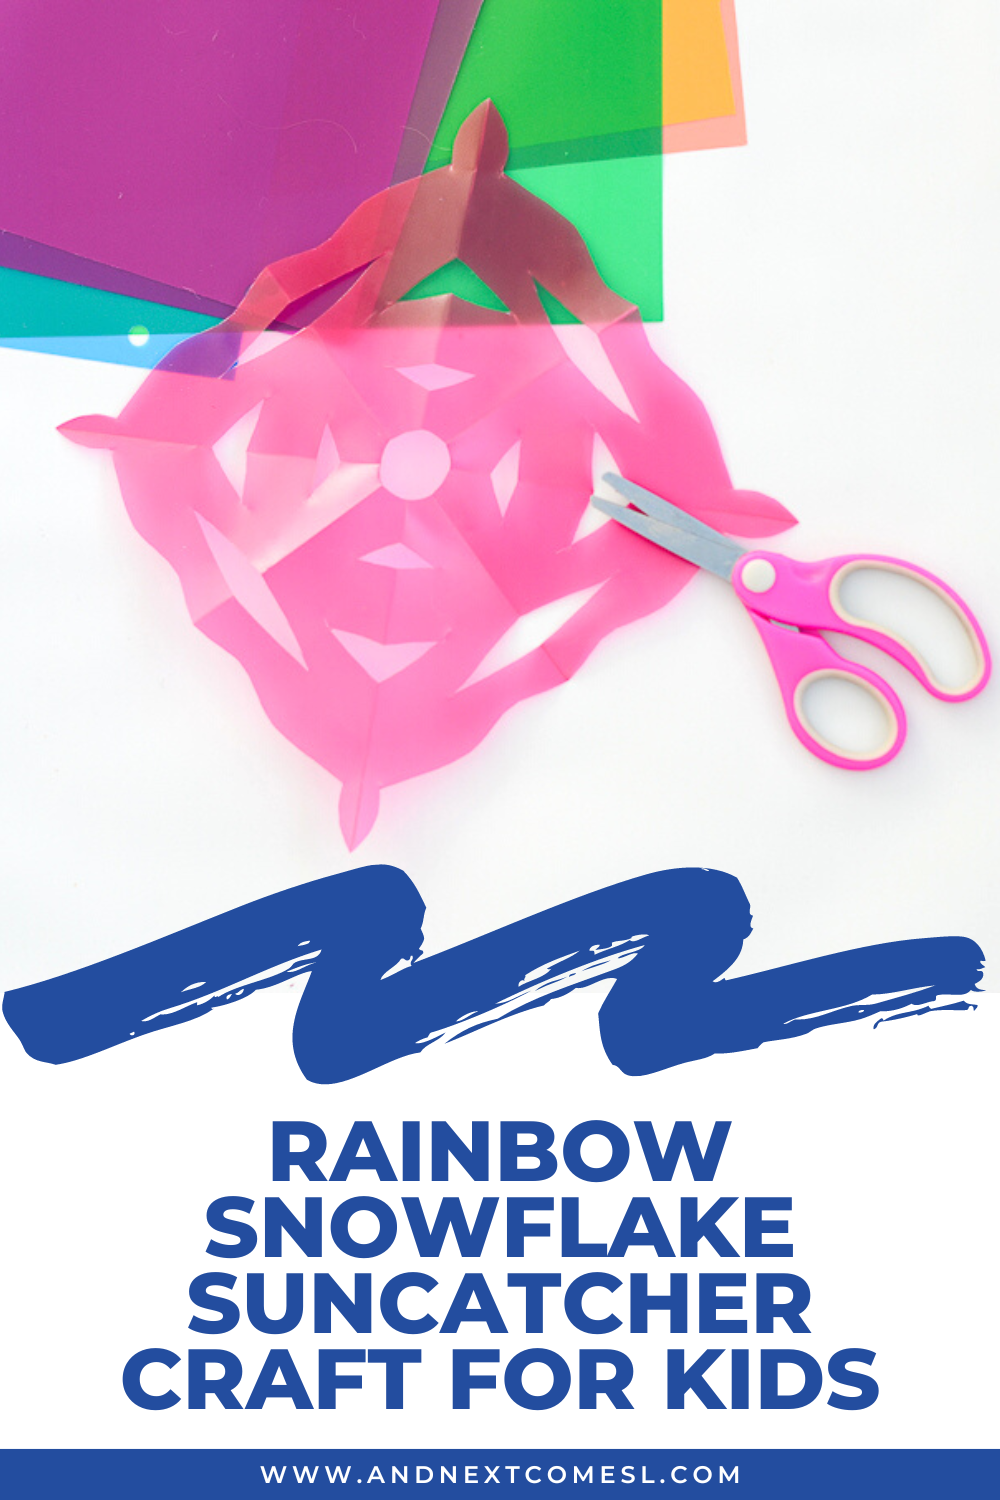 Rainbow snowflake suncatcher craft for kids